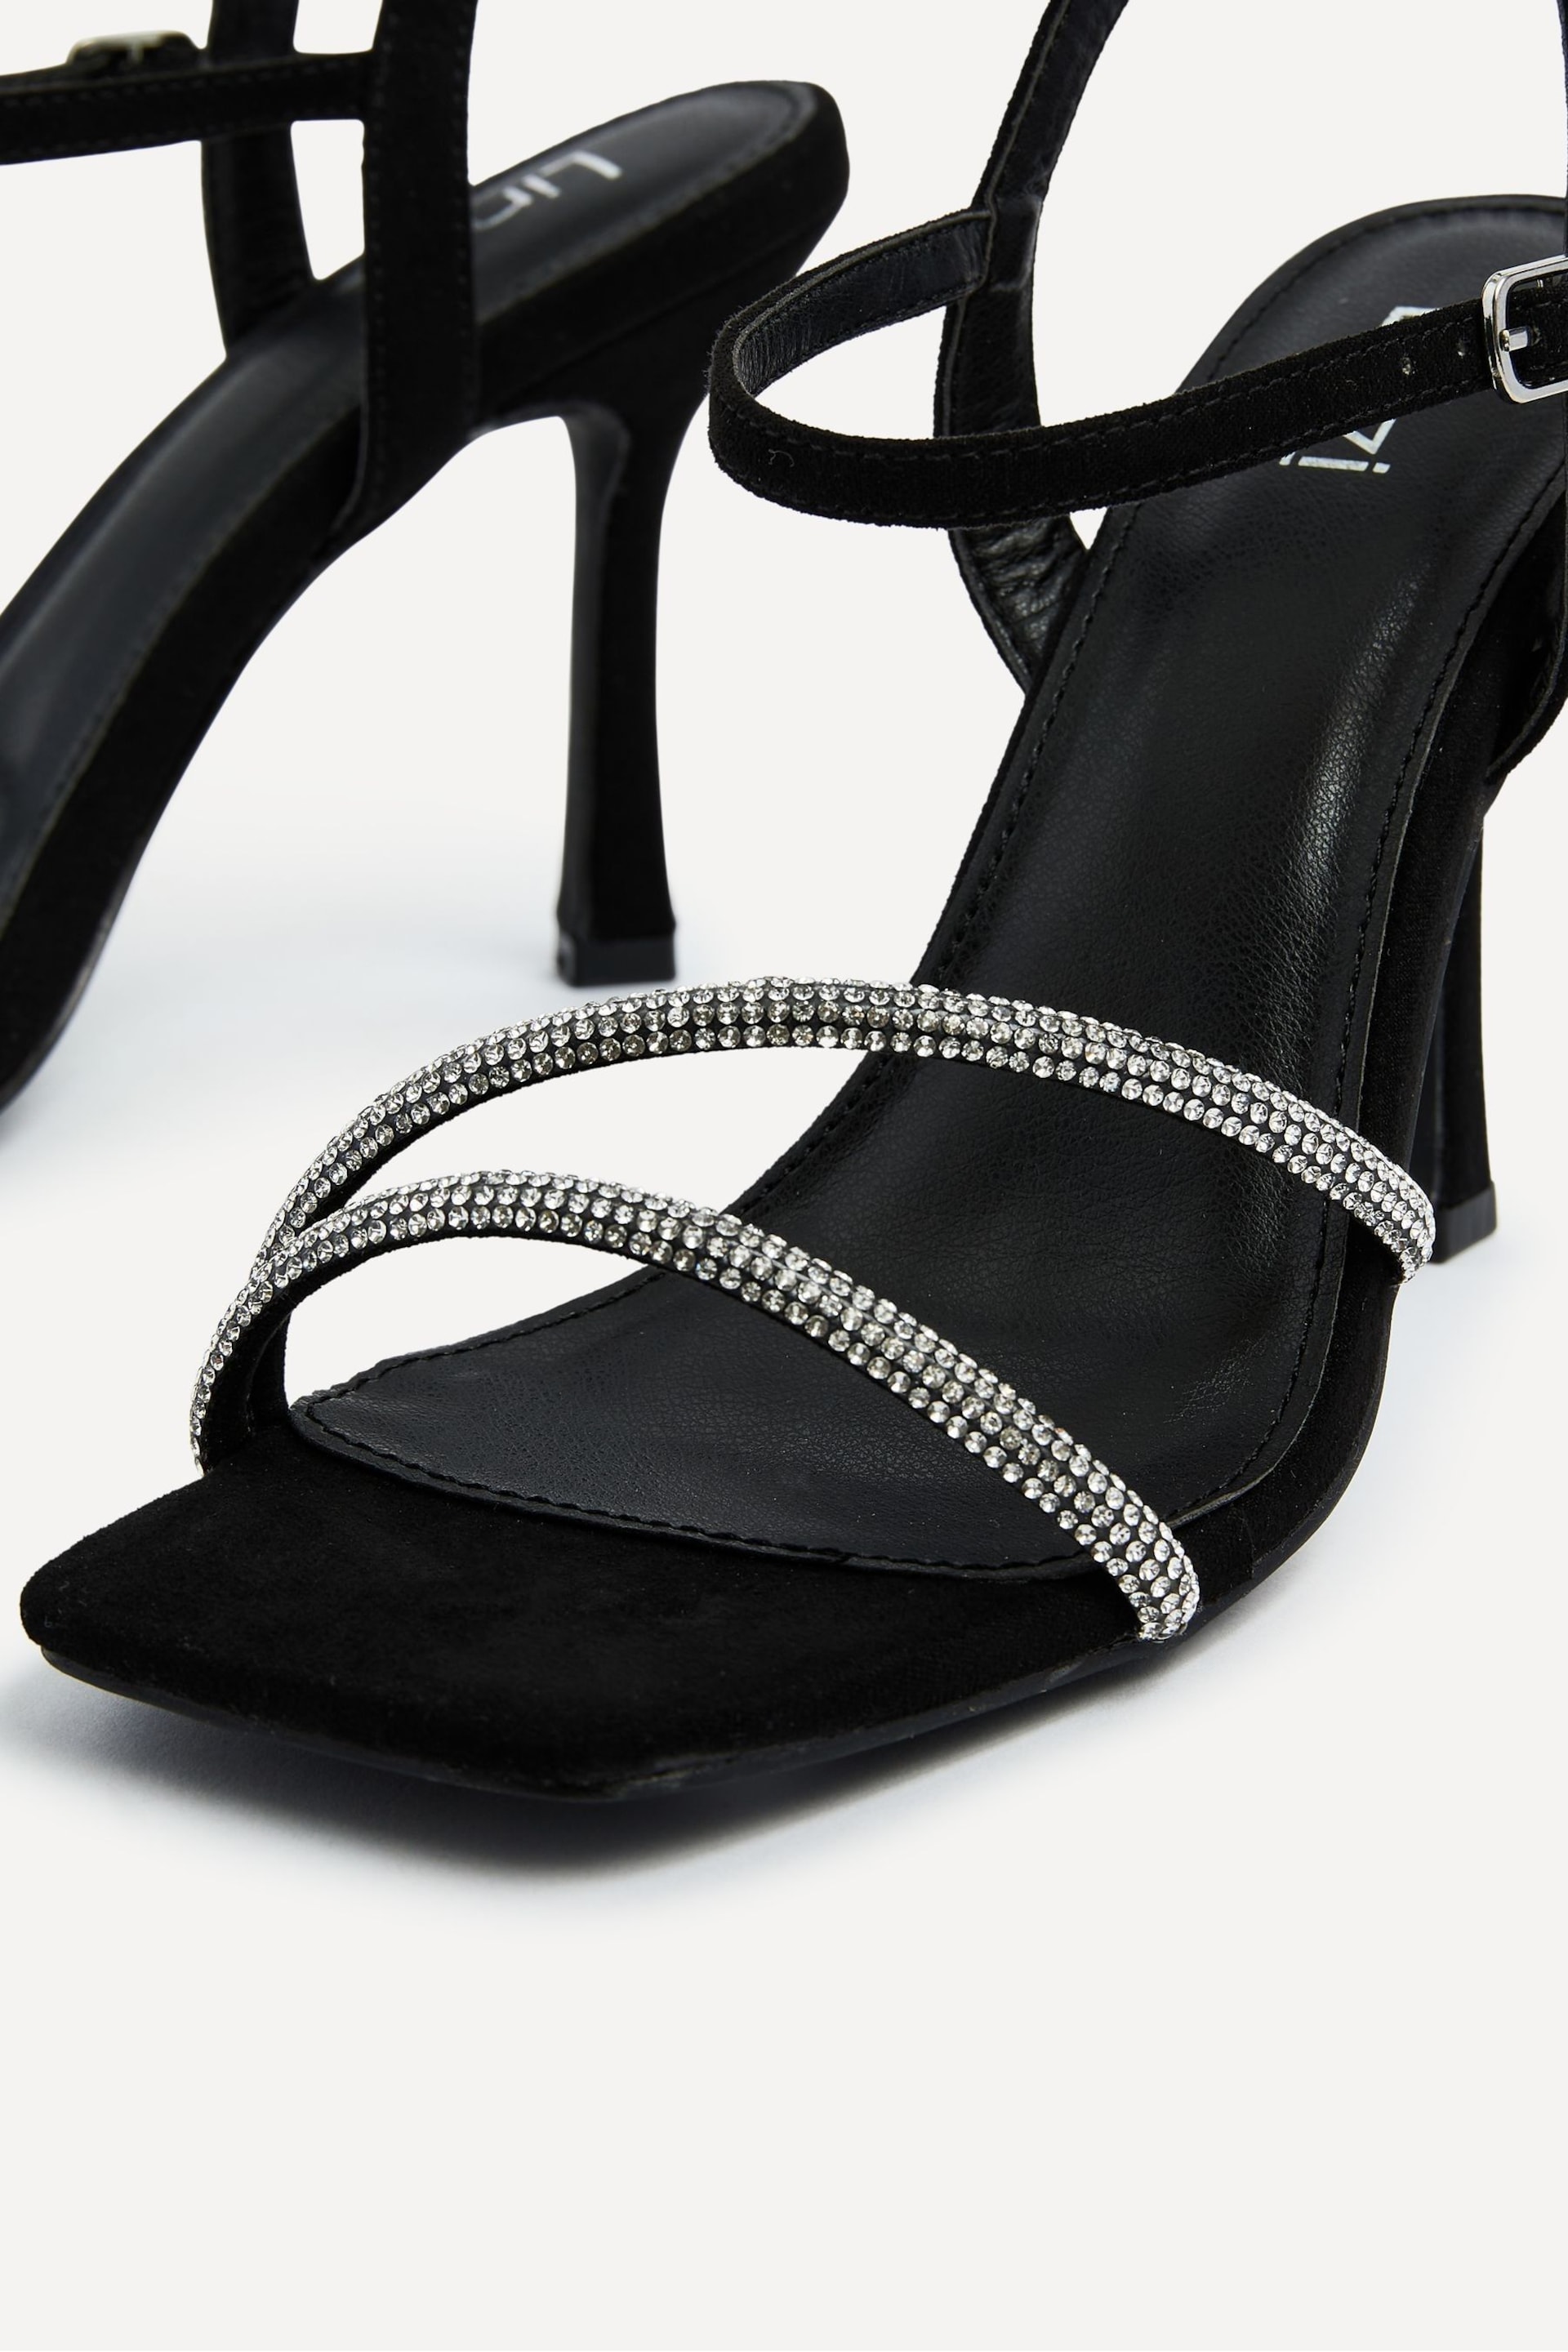 Linzi Black Mesmerized Diamanté Embellished Strappy Heels - Image 5 of 5